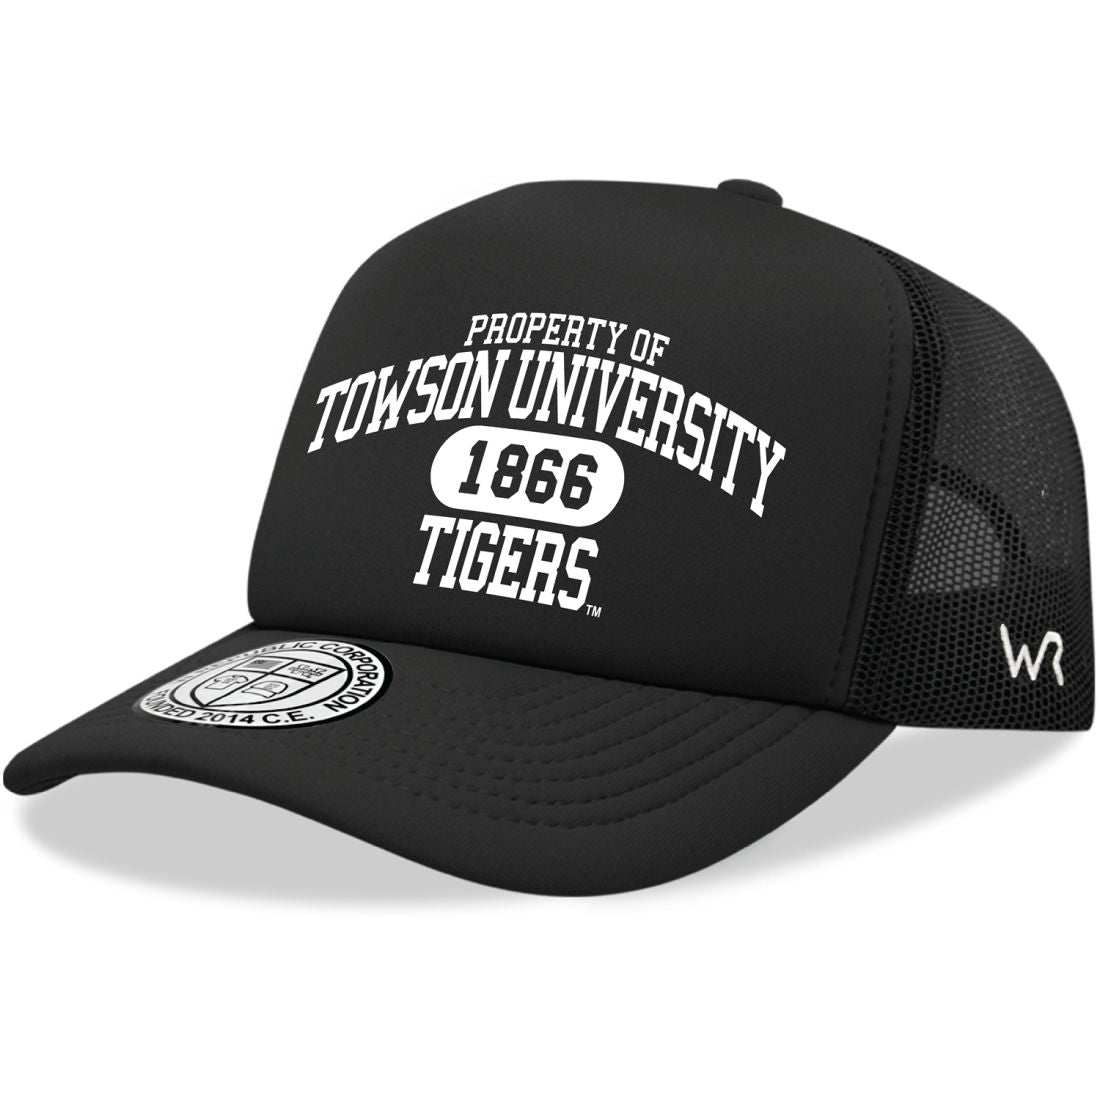 TU Towson University Tigers Property Foam Trucker Hats